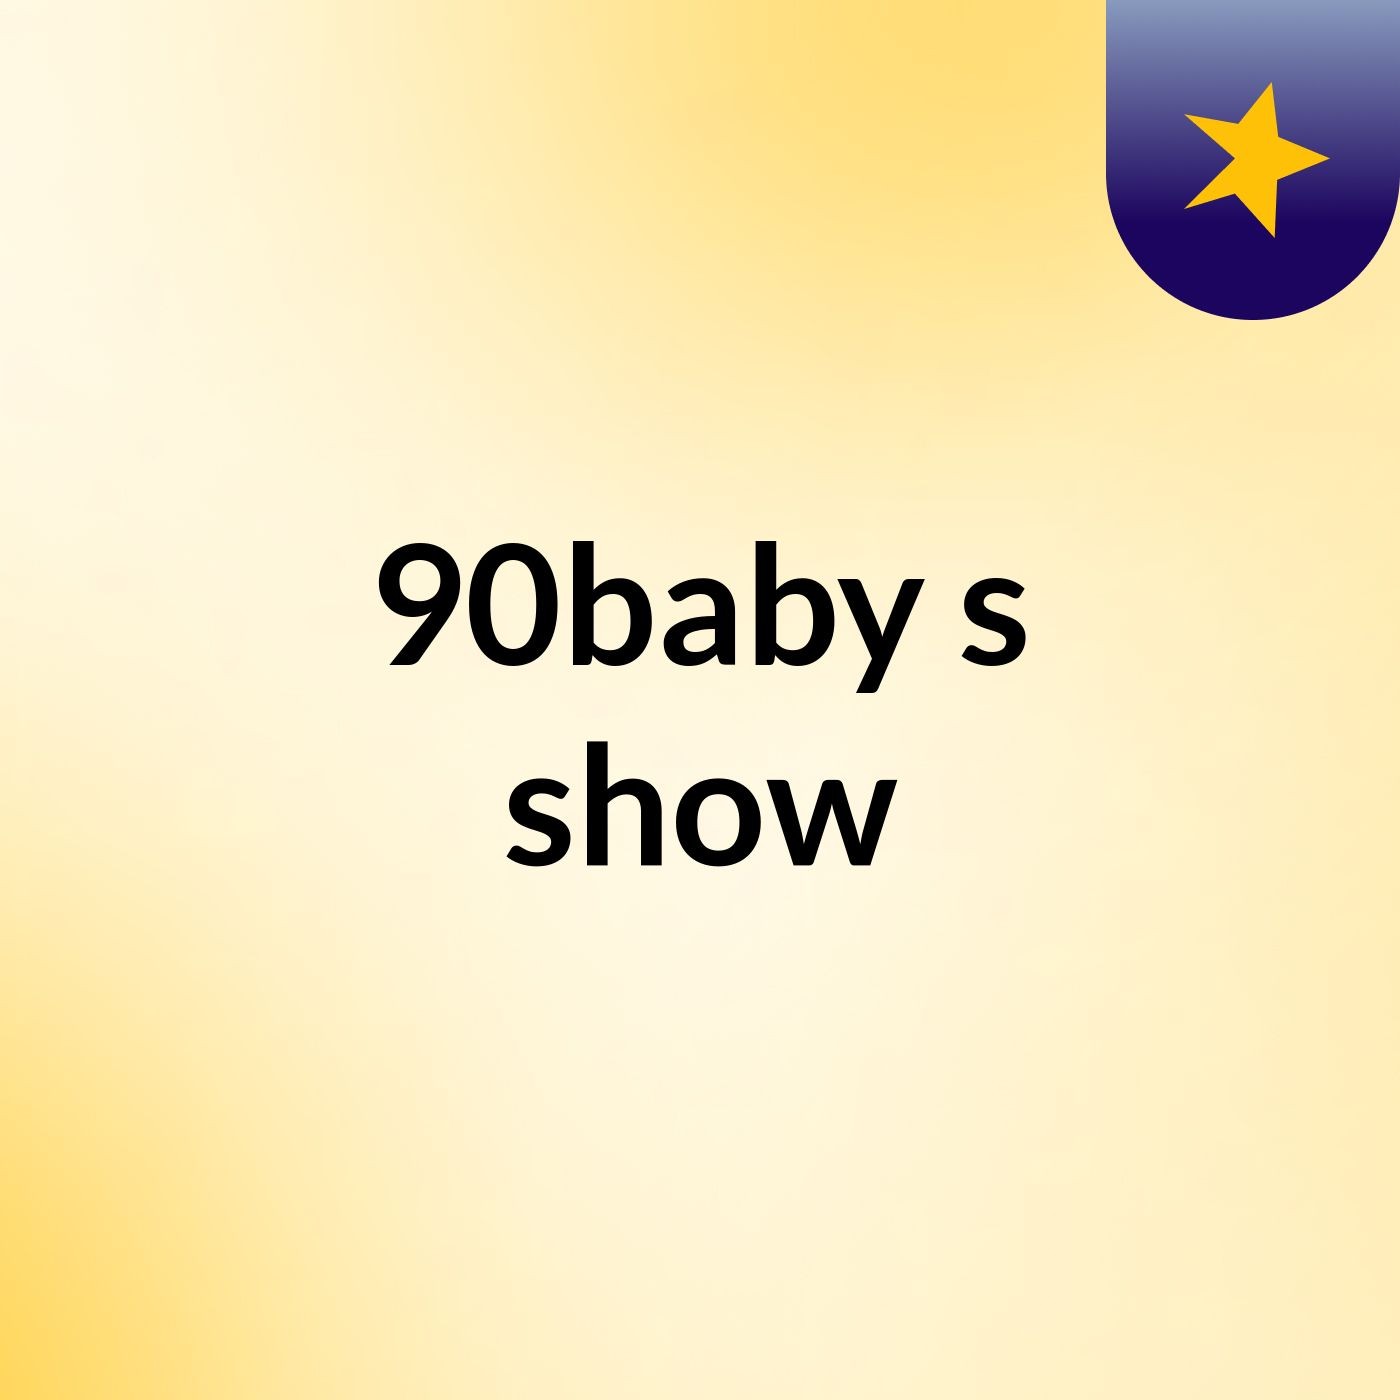 90baby's show